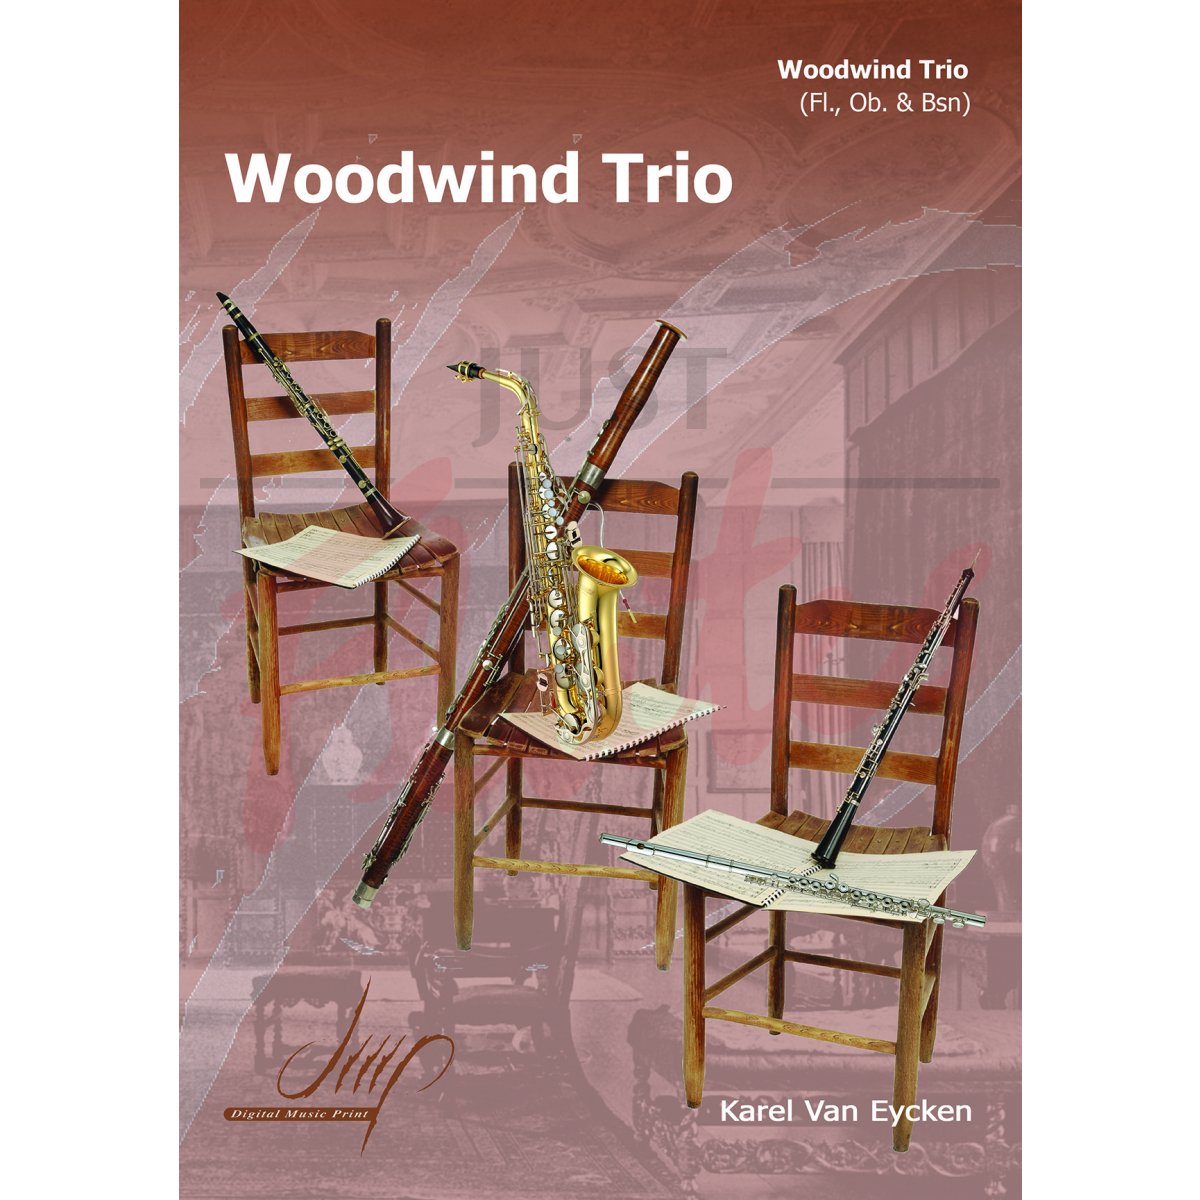 Woodwind trio